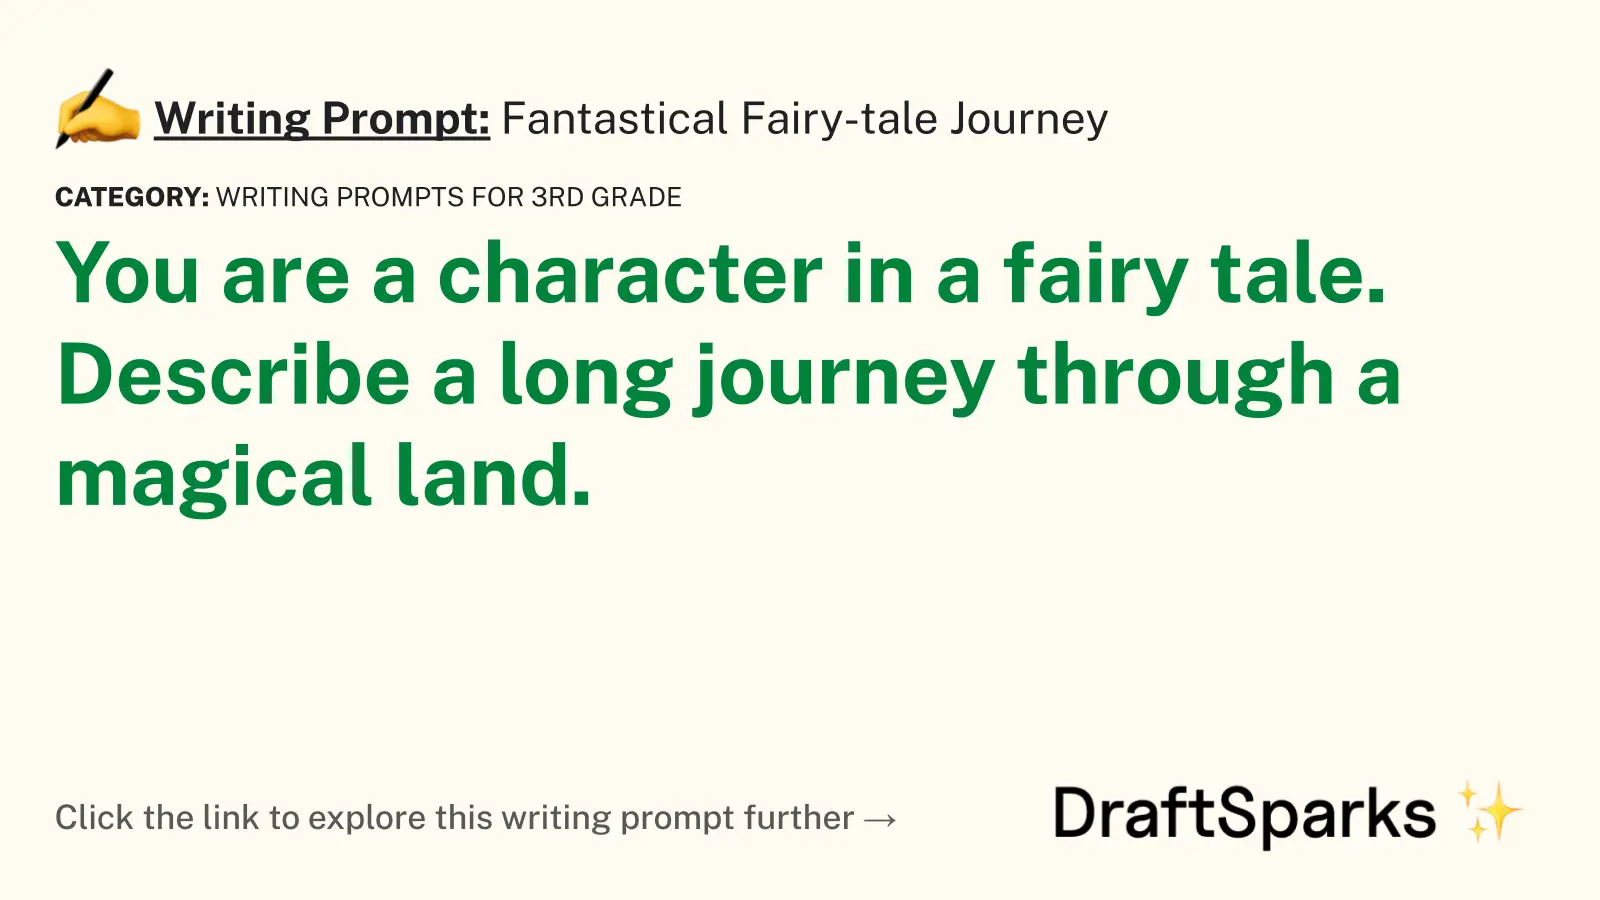 Fantastical Fairy-tale Journey